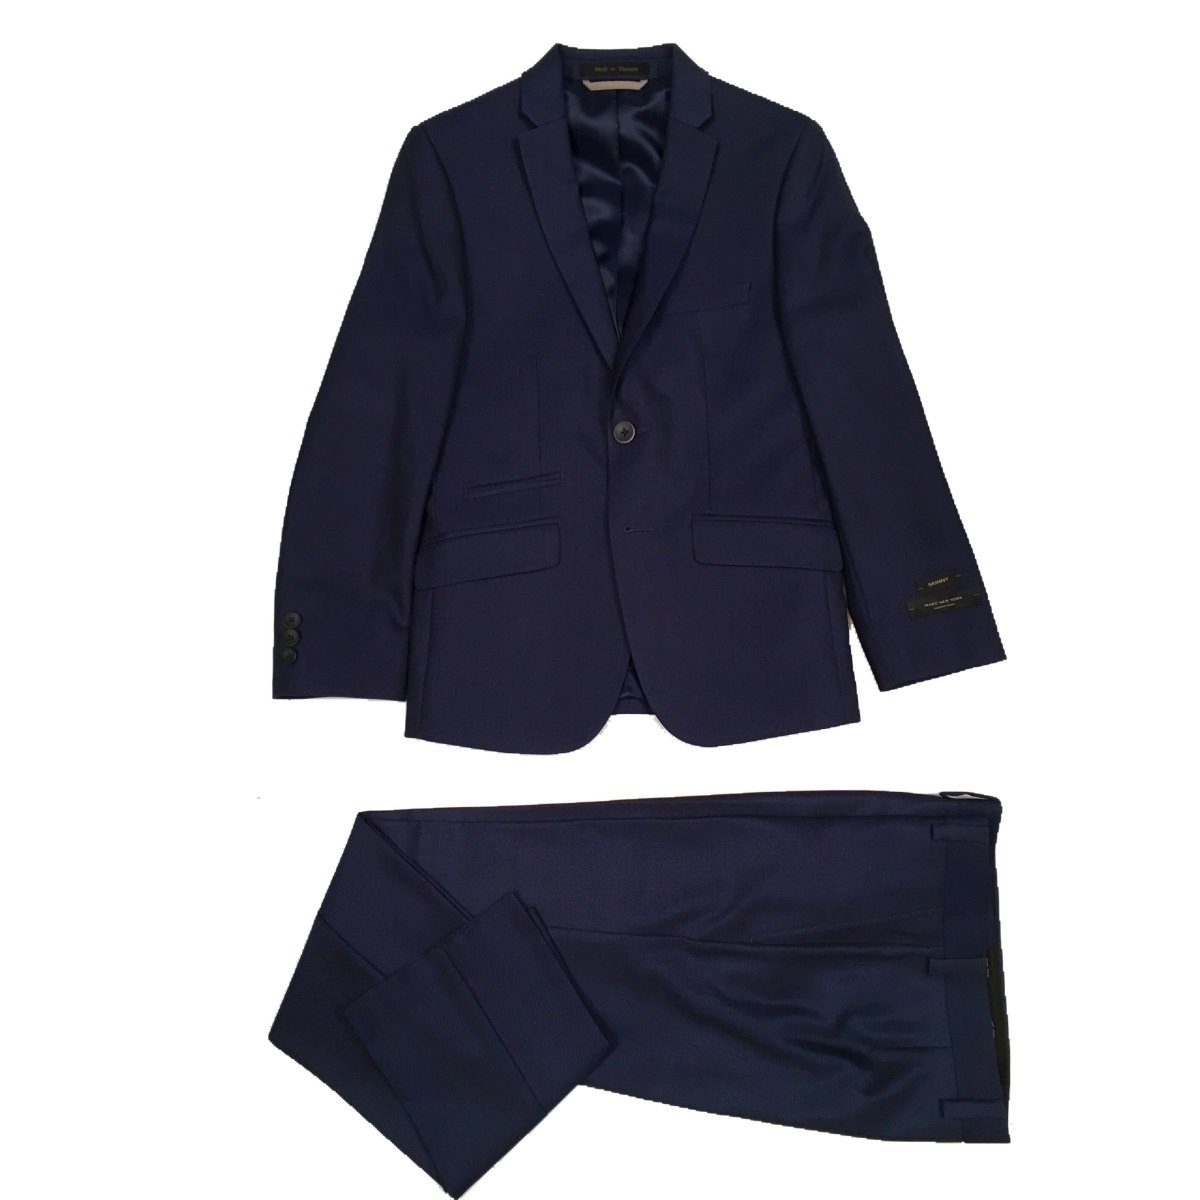 Marc New York Boys Husky Neat Blue Suit WH461 Suits (Boys) Marc New York 